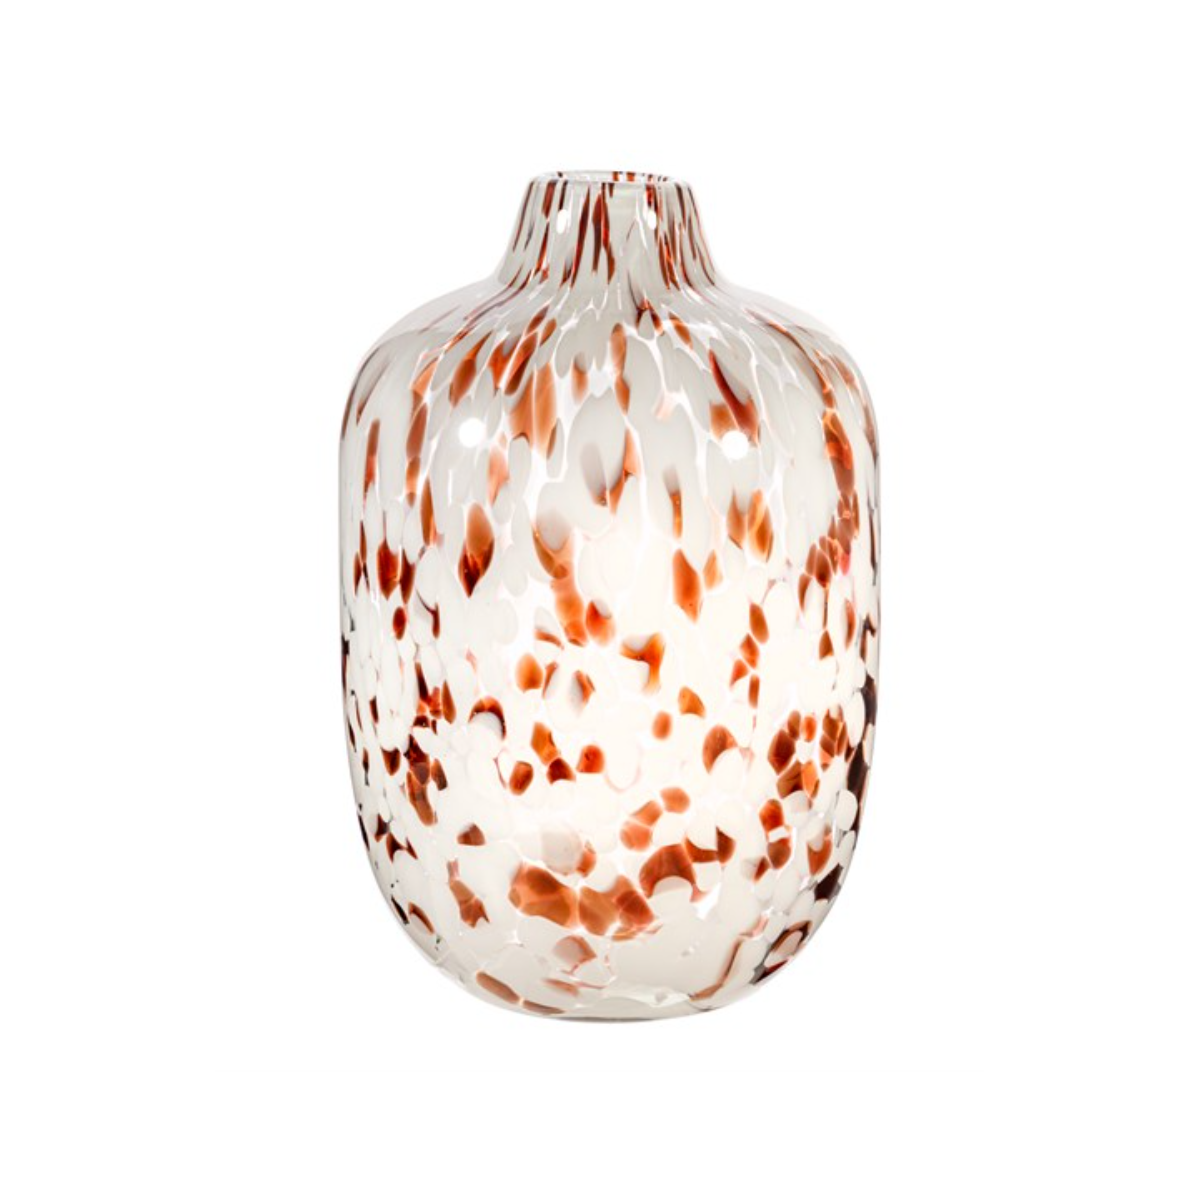 Large brown glass vase